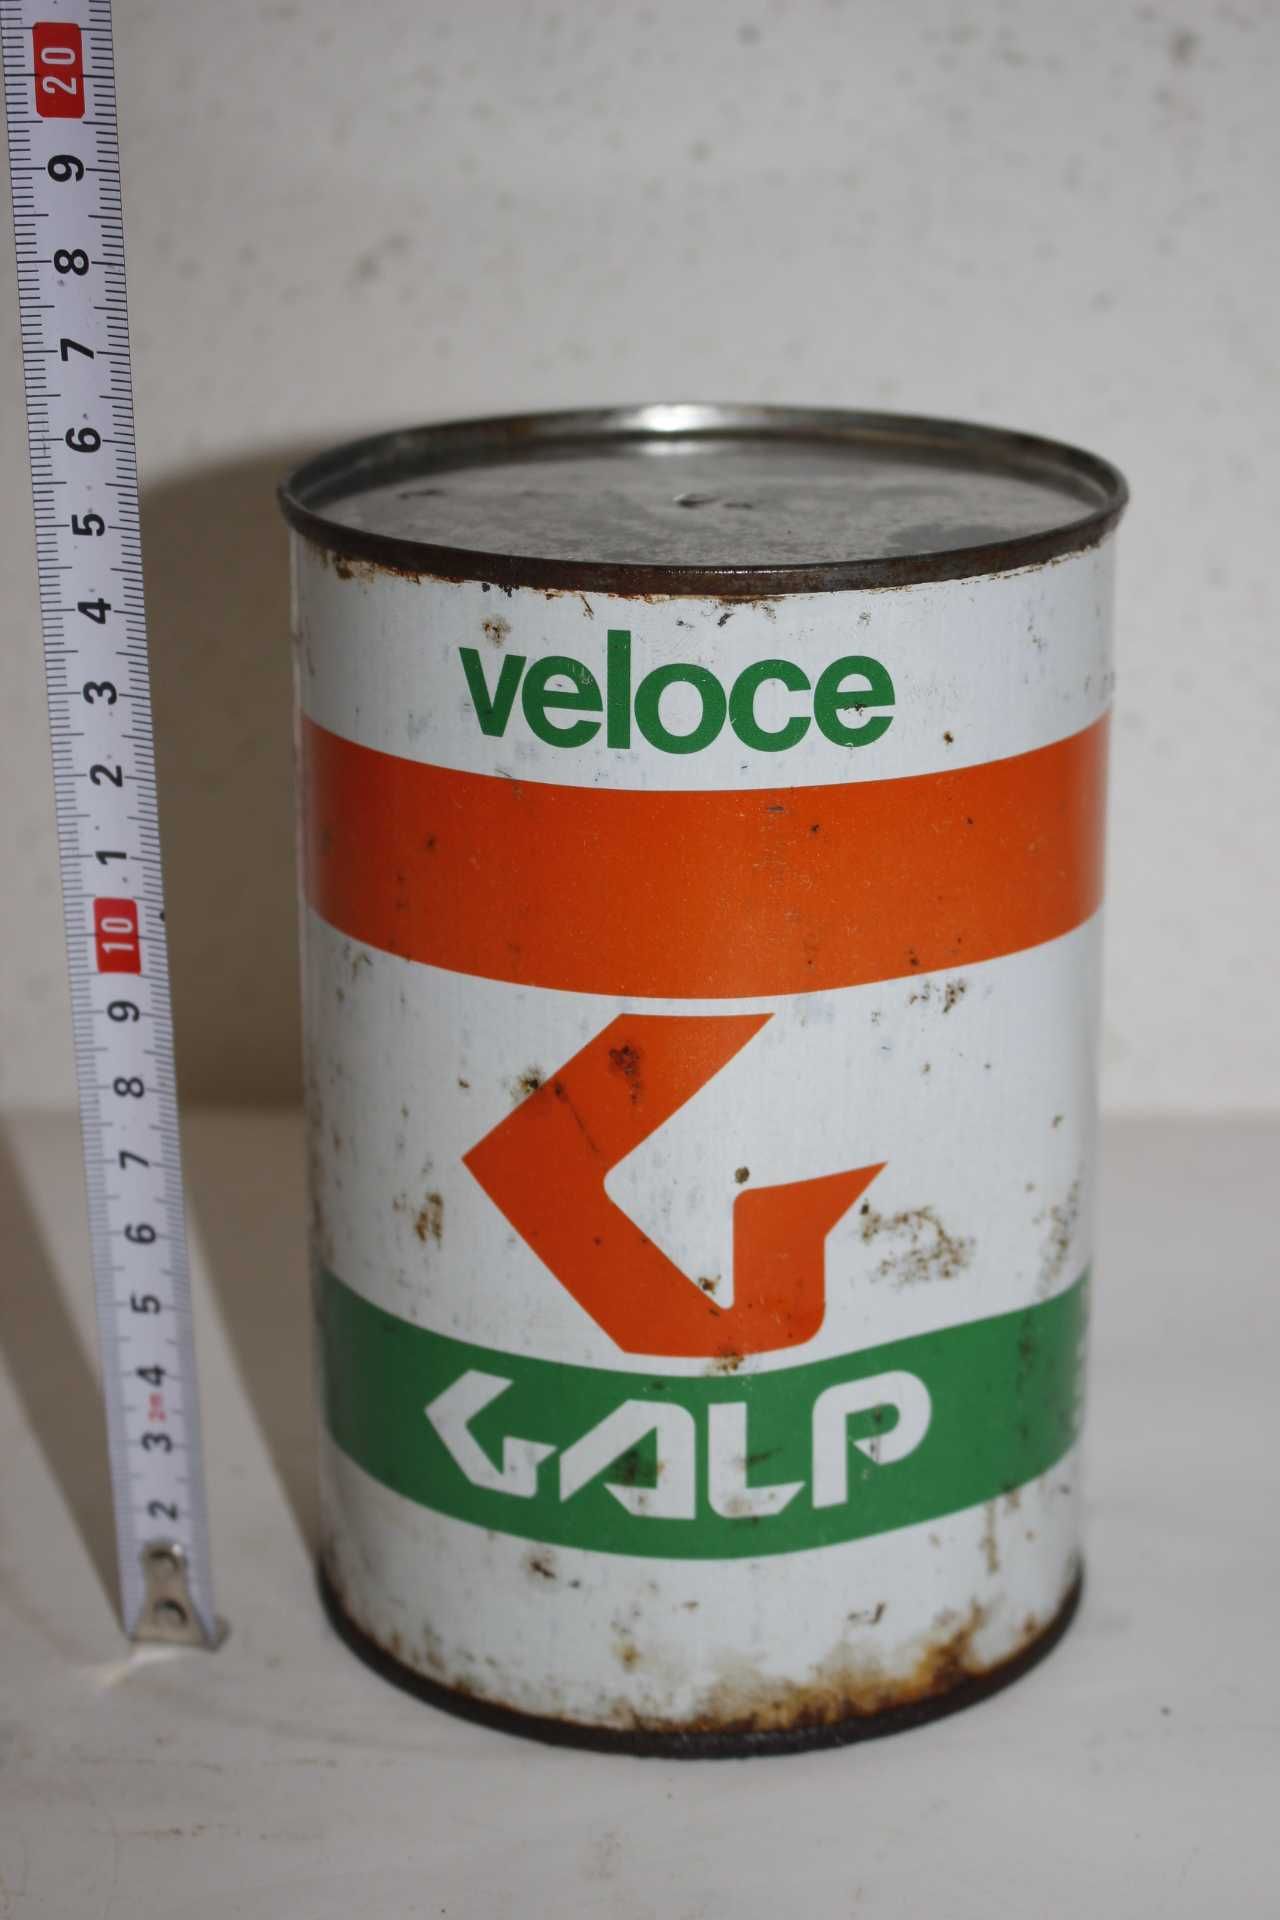 Lata de Oleo - Galp Veloce - Petrogal -  1 Litro - Cheia